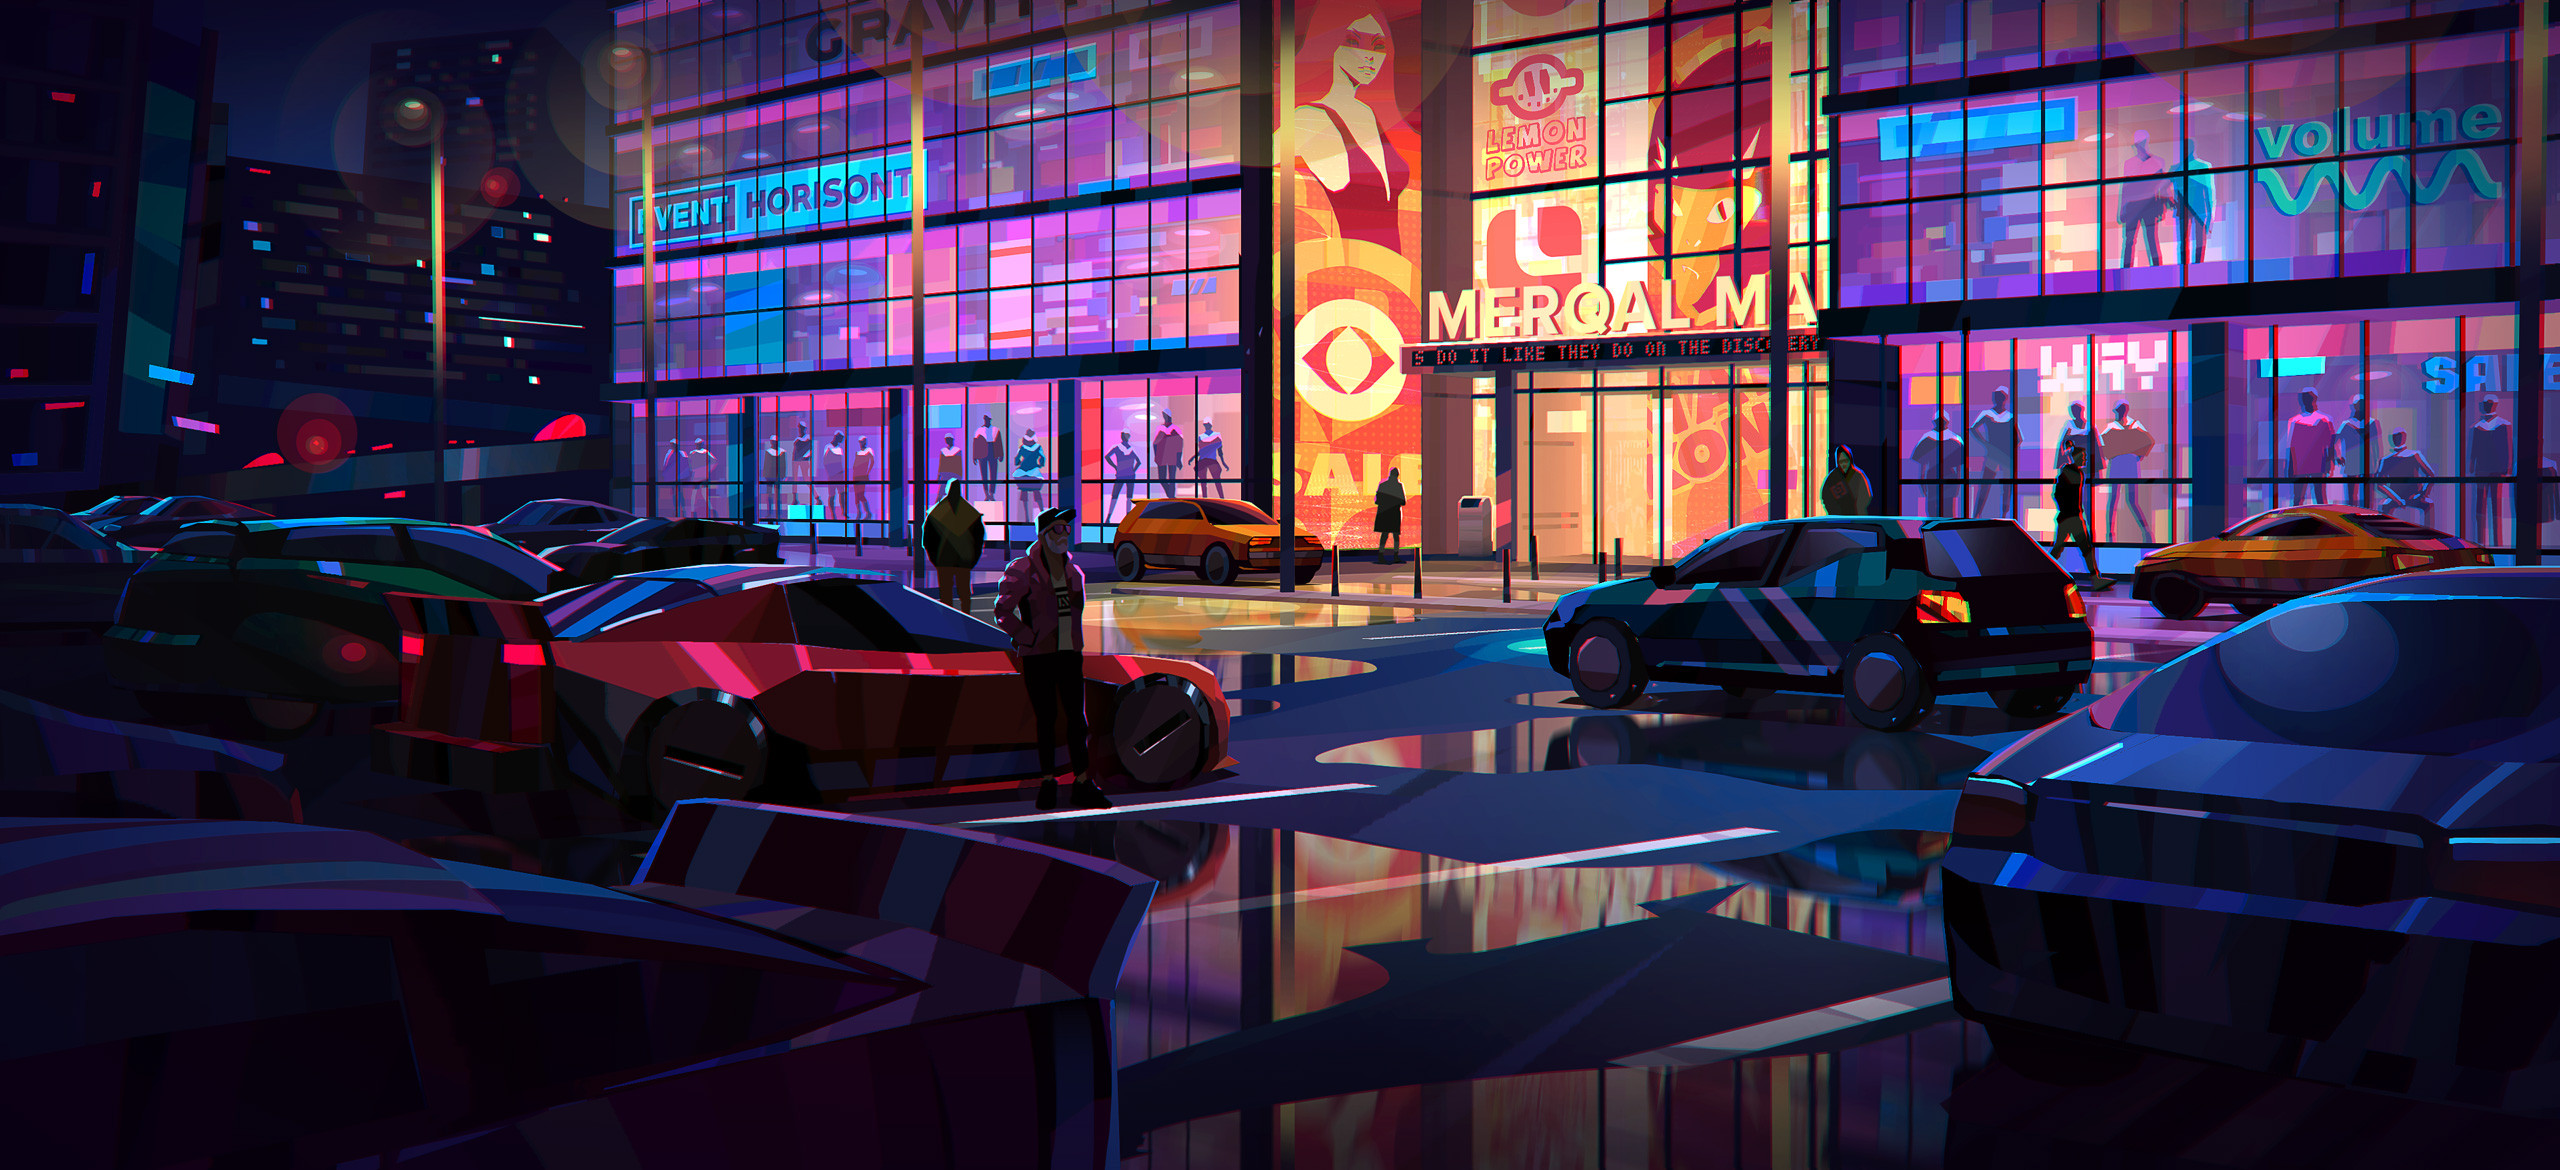 Digital Art Artwork Illustration City Cityscape Night Vehicle Reflection Lights Architecture Car Bui 2560x1170